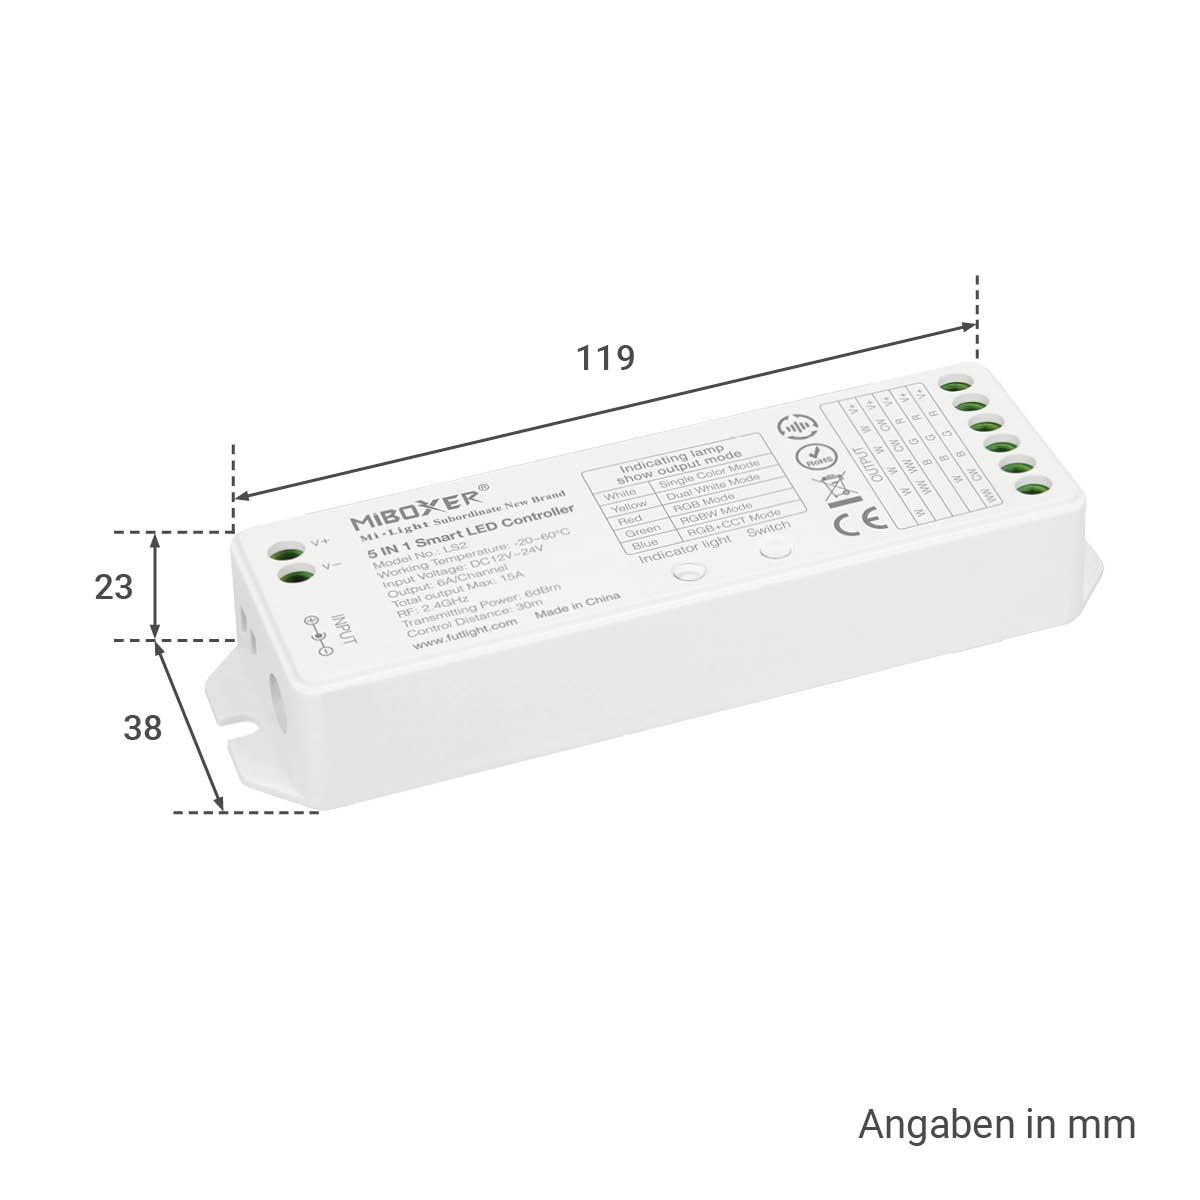 MiBoxer RGB LED Controller 3 Kanal 12/24V Multifunktion LED Strip Panel Steuerung FUT037M